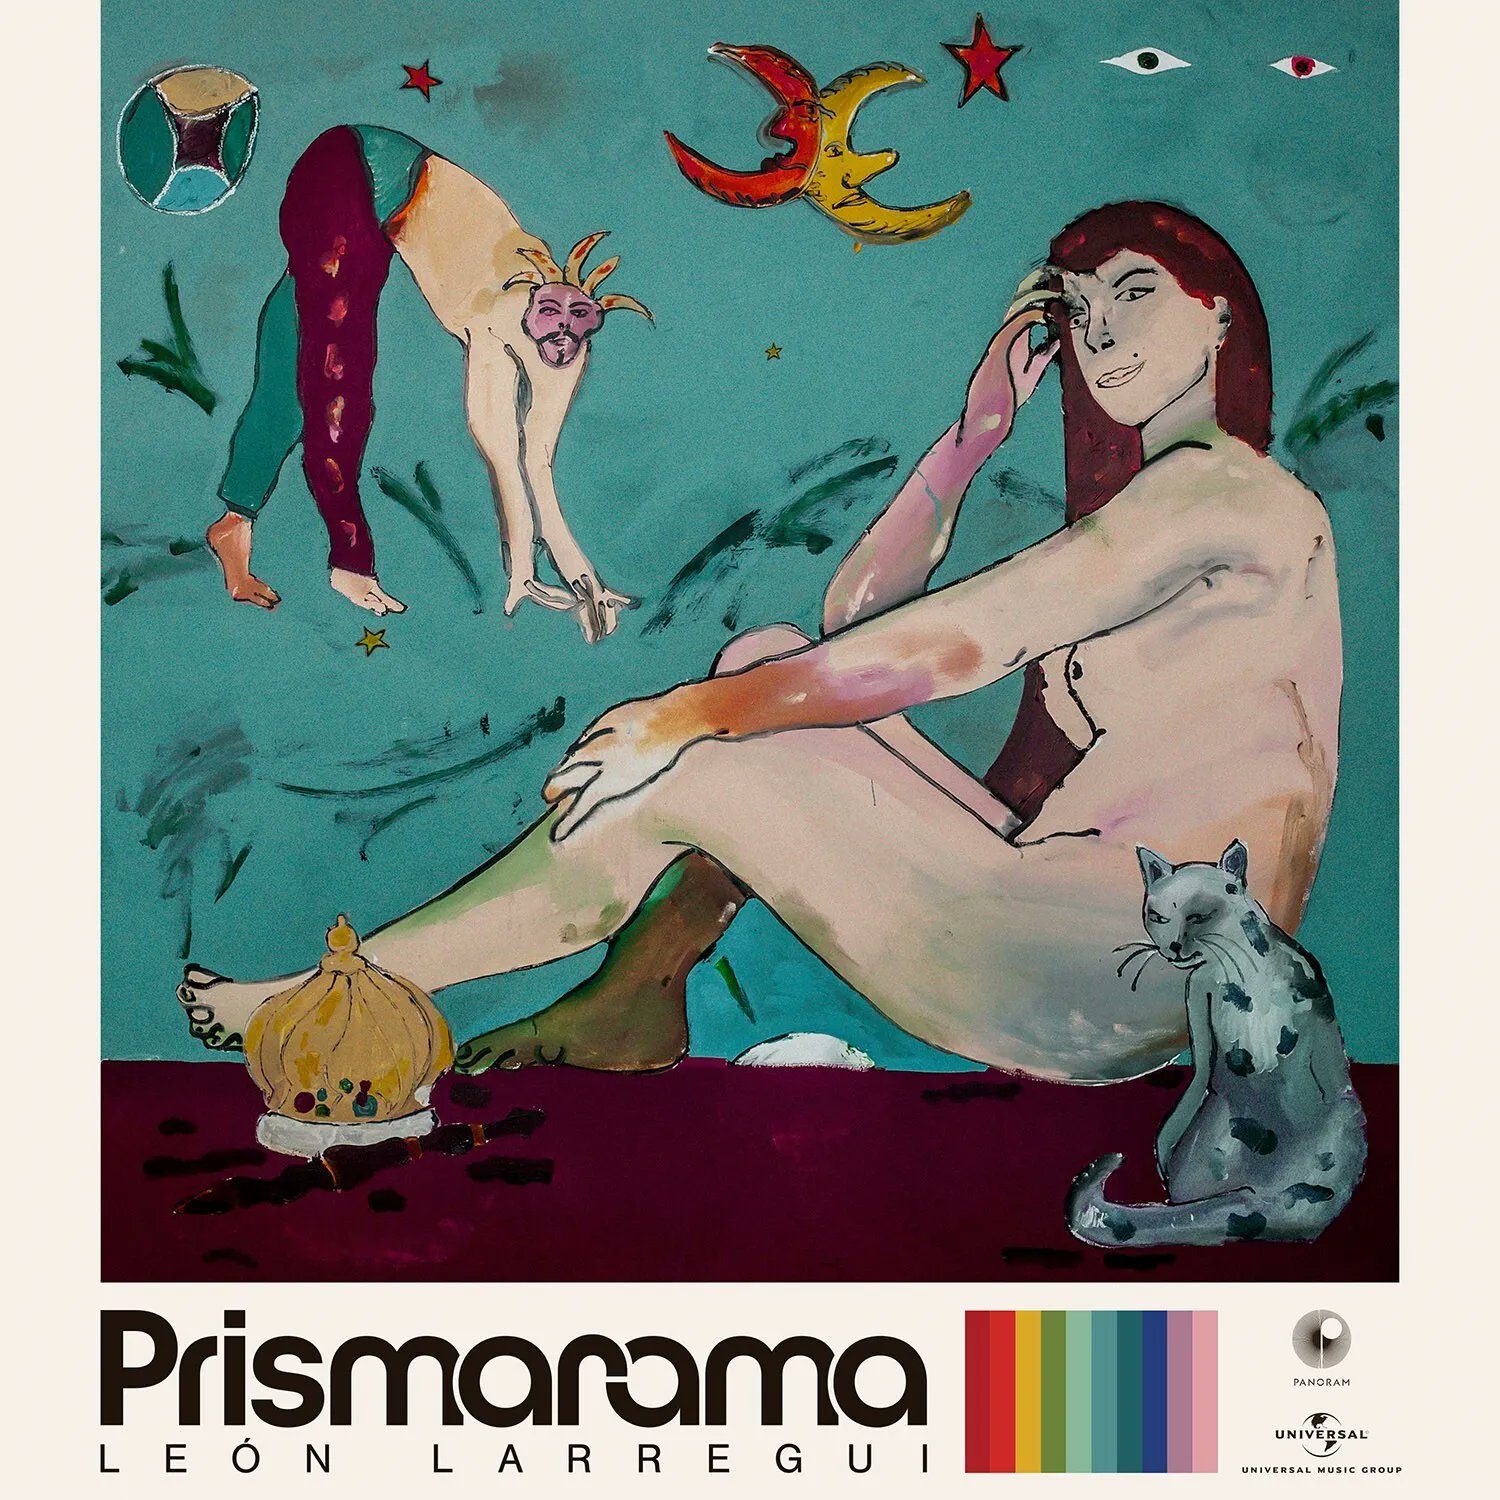 León Larregui PRISMARAMA cover artwork